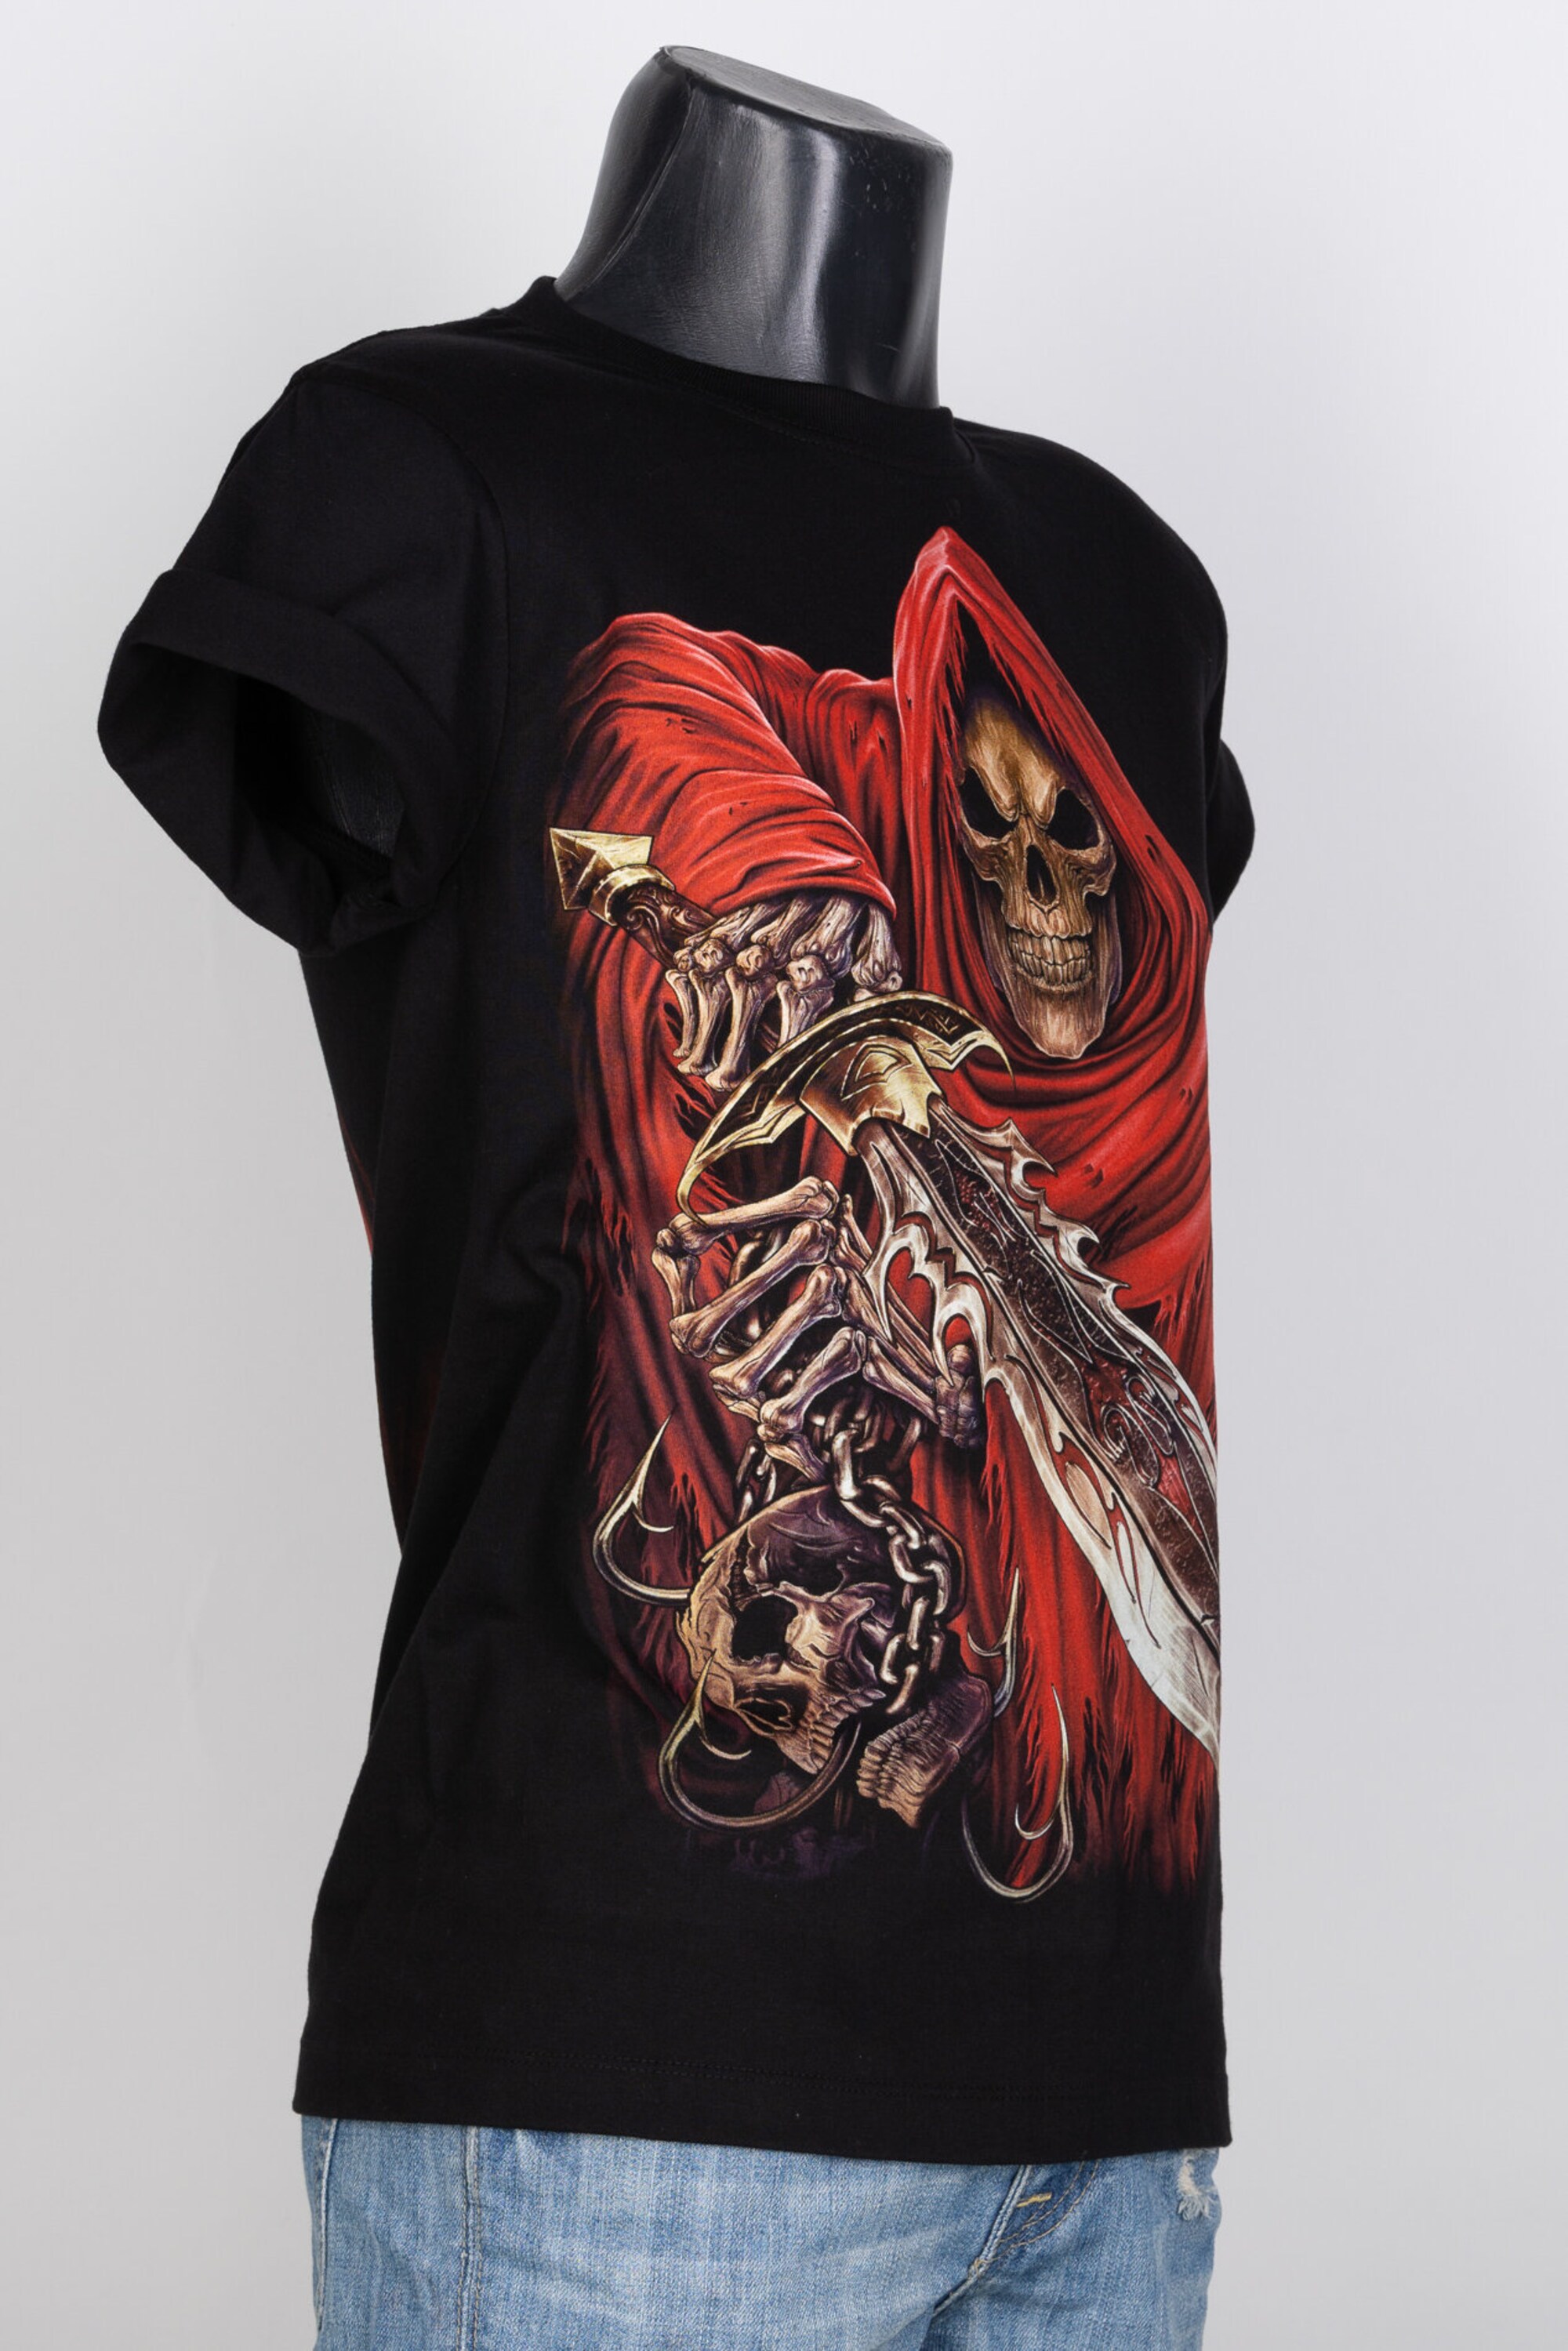 T-Shirt HD Rock Chang Original Samurai Skeleton Death Sword